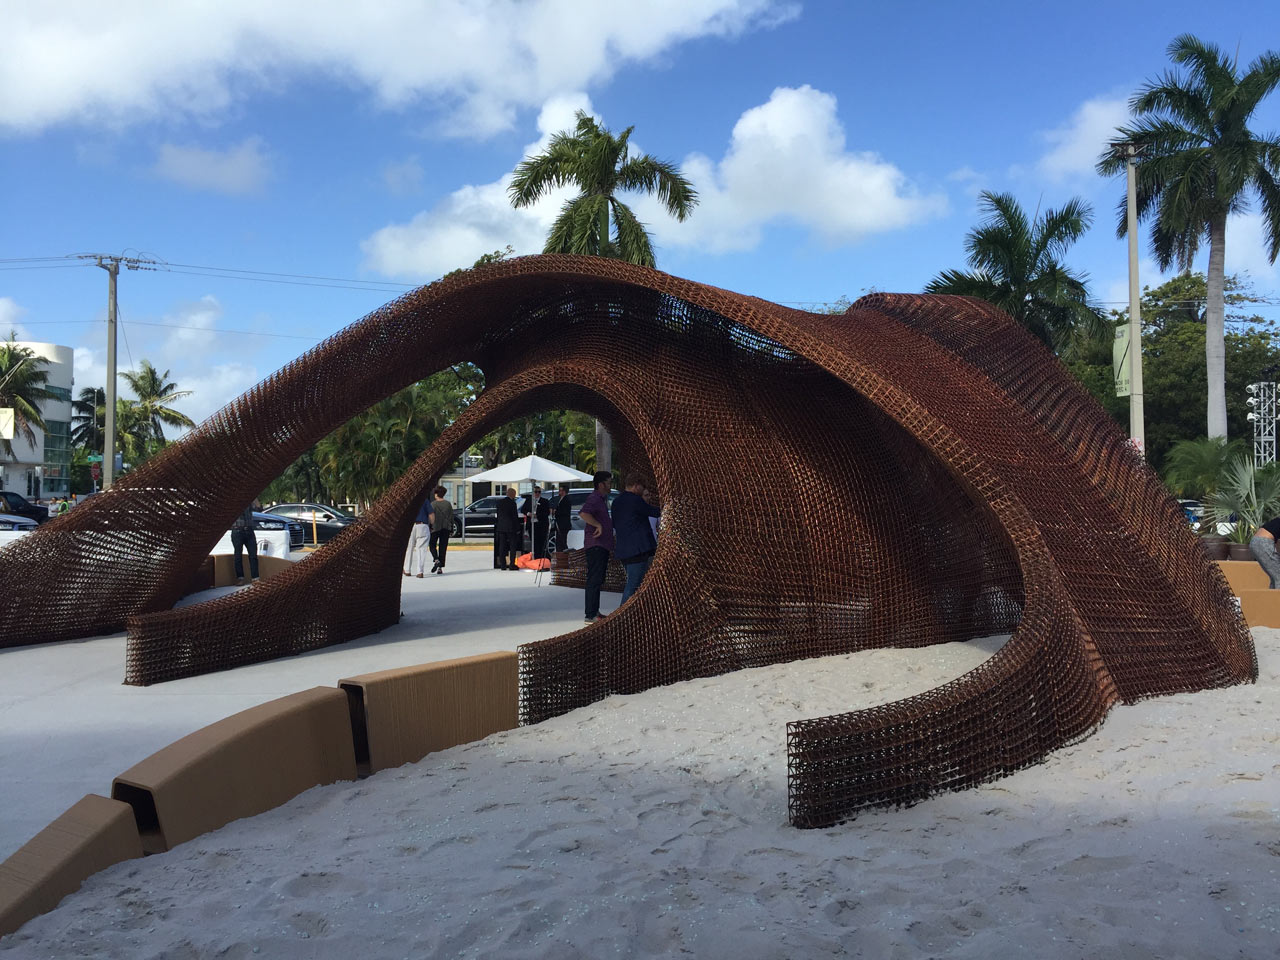 The Best of Miami Design Week 2016